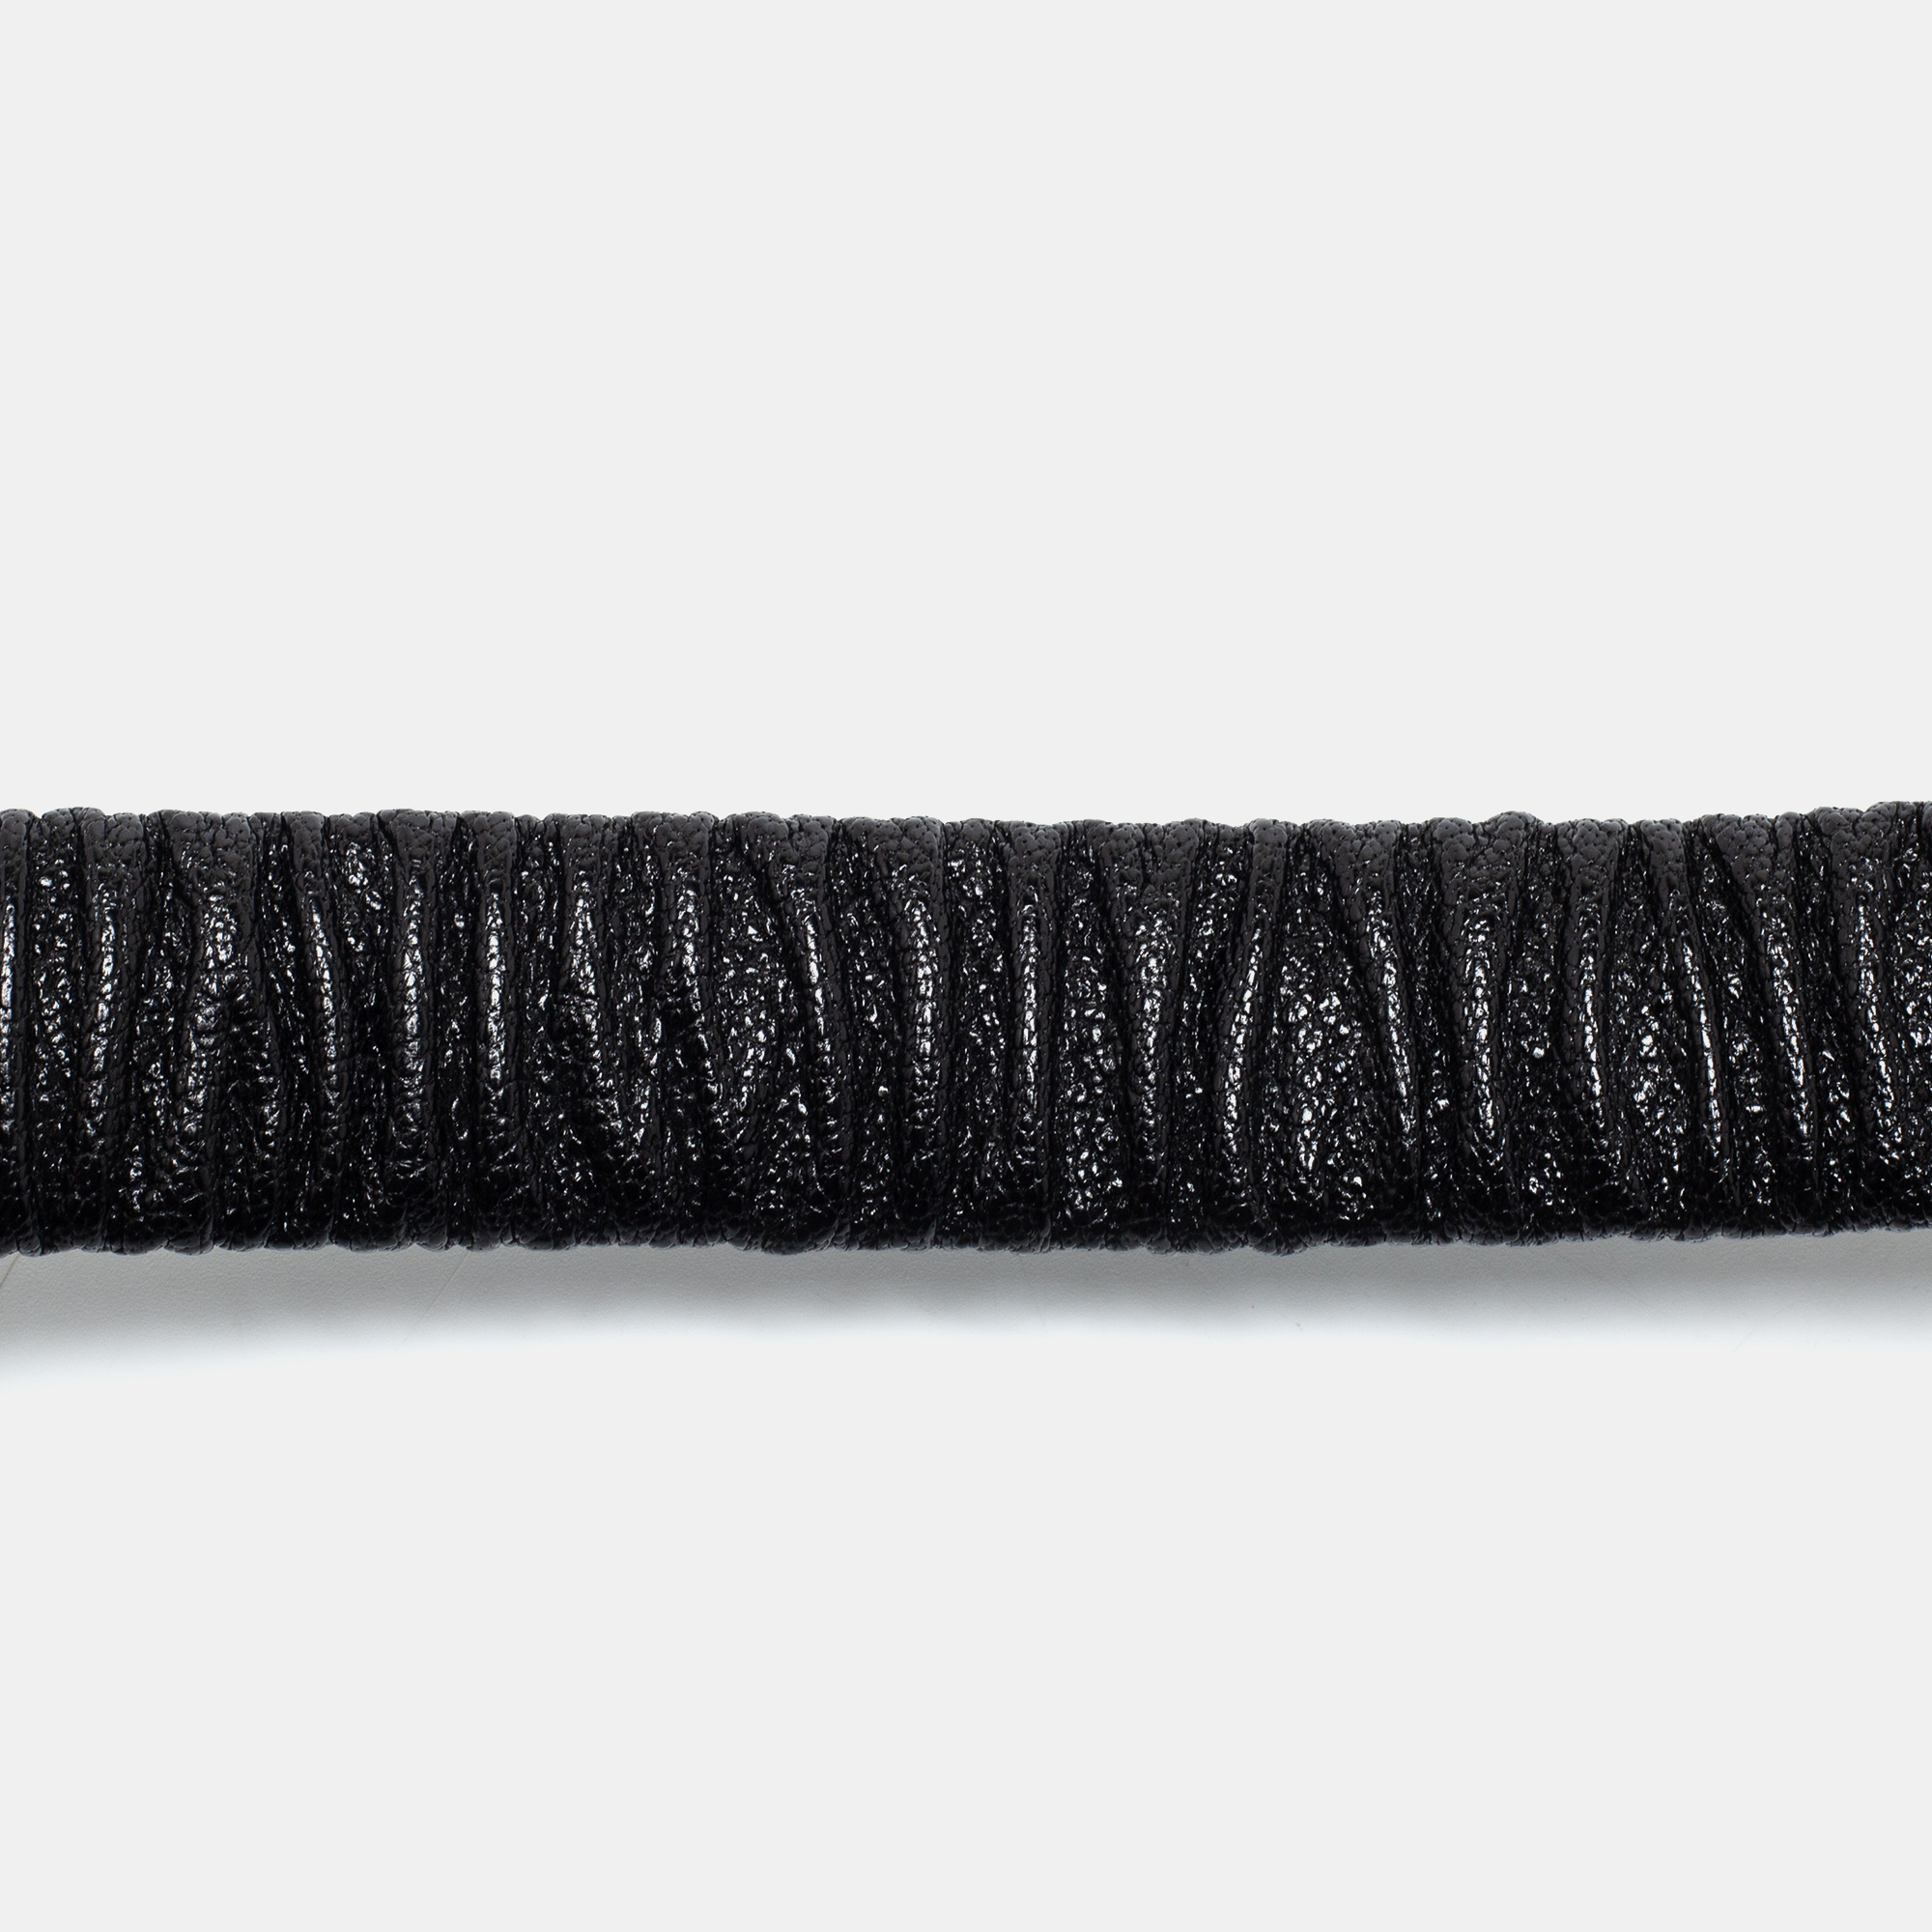 Burberry Black Gathered Leather Slim Waist Belt 90CM